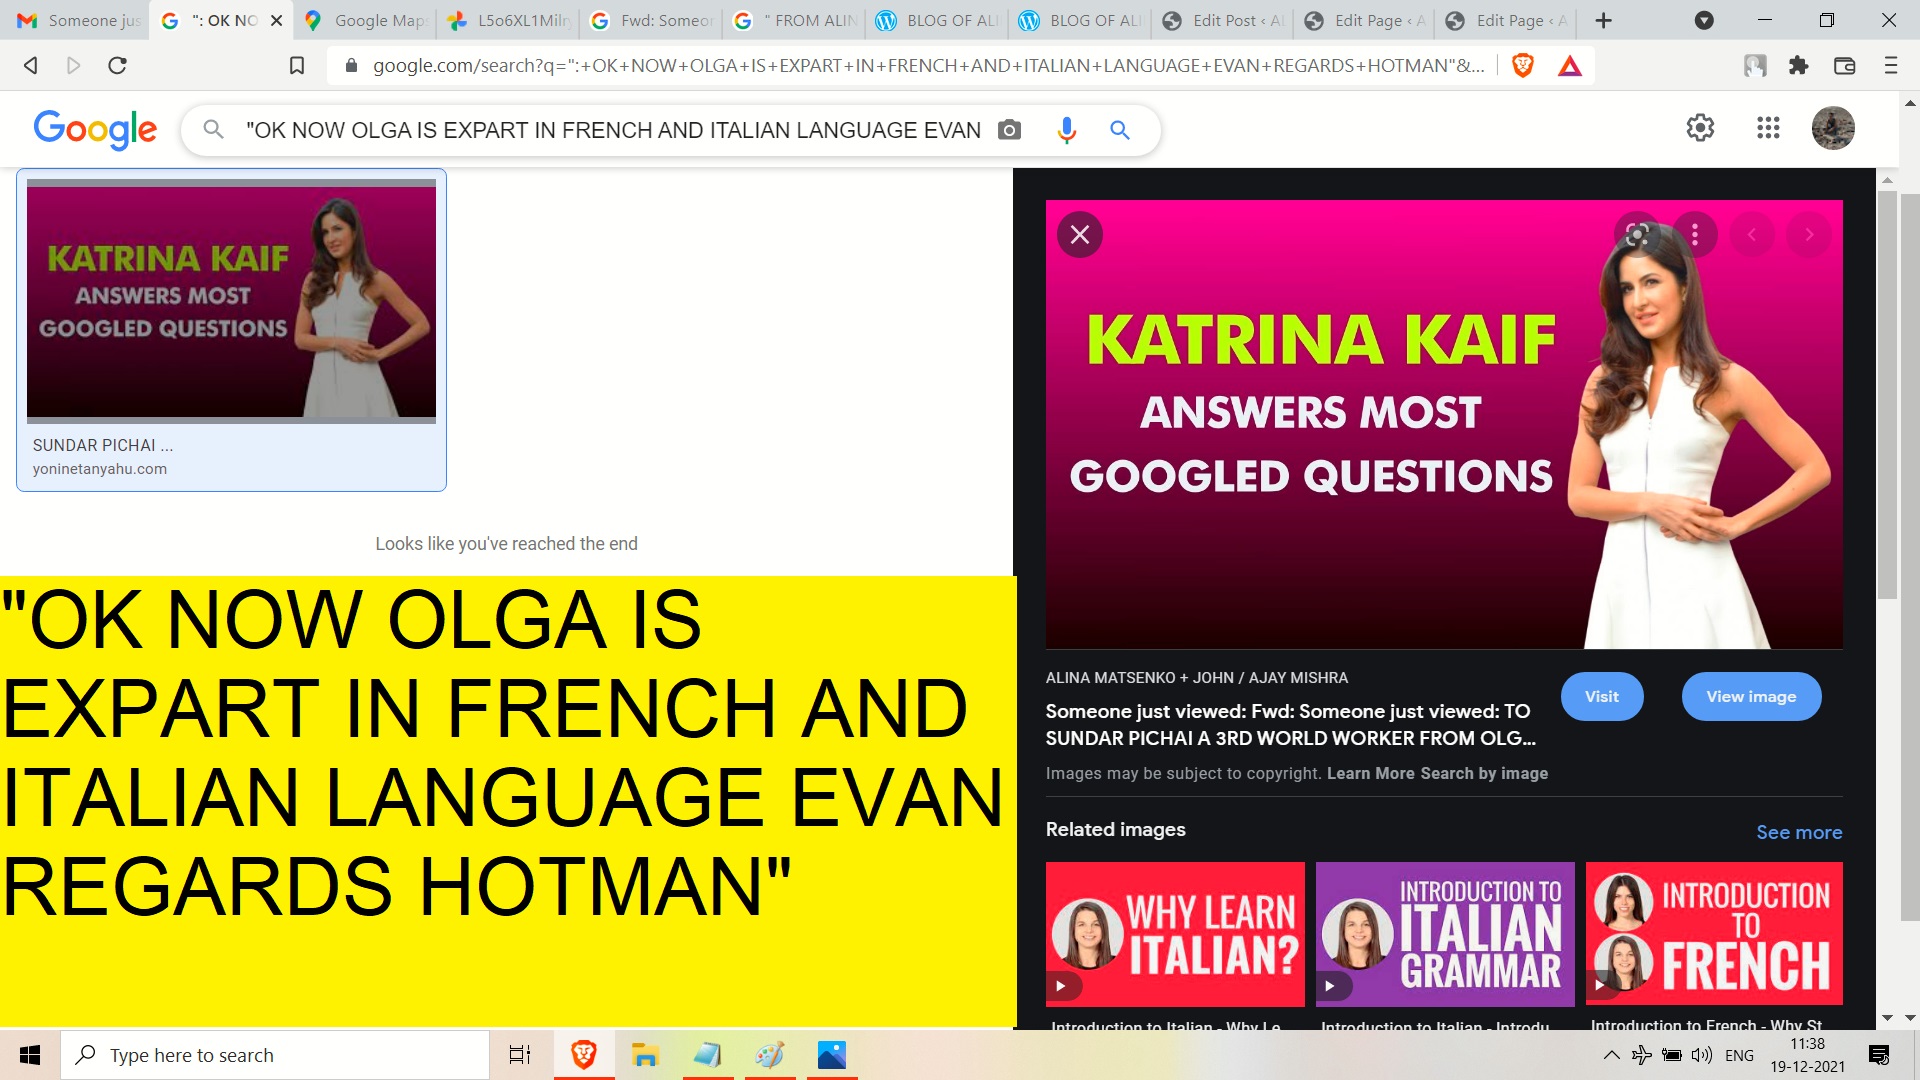 OK NOW OLGA IS EXPART IN FRENCH AND ITALIAN LANGUAGE EVAN REGARDS HOTMAN